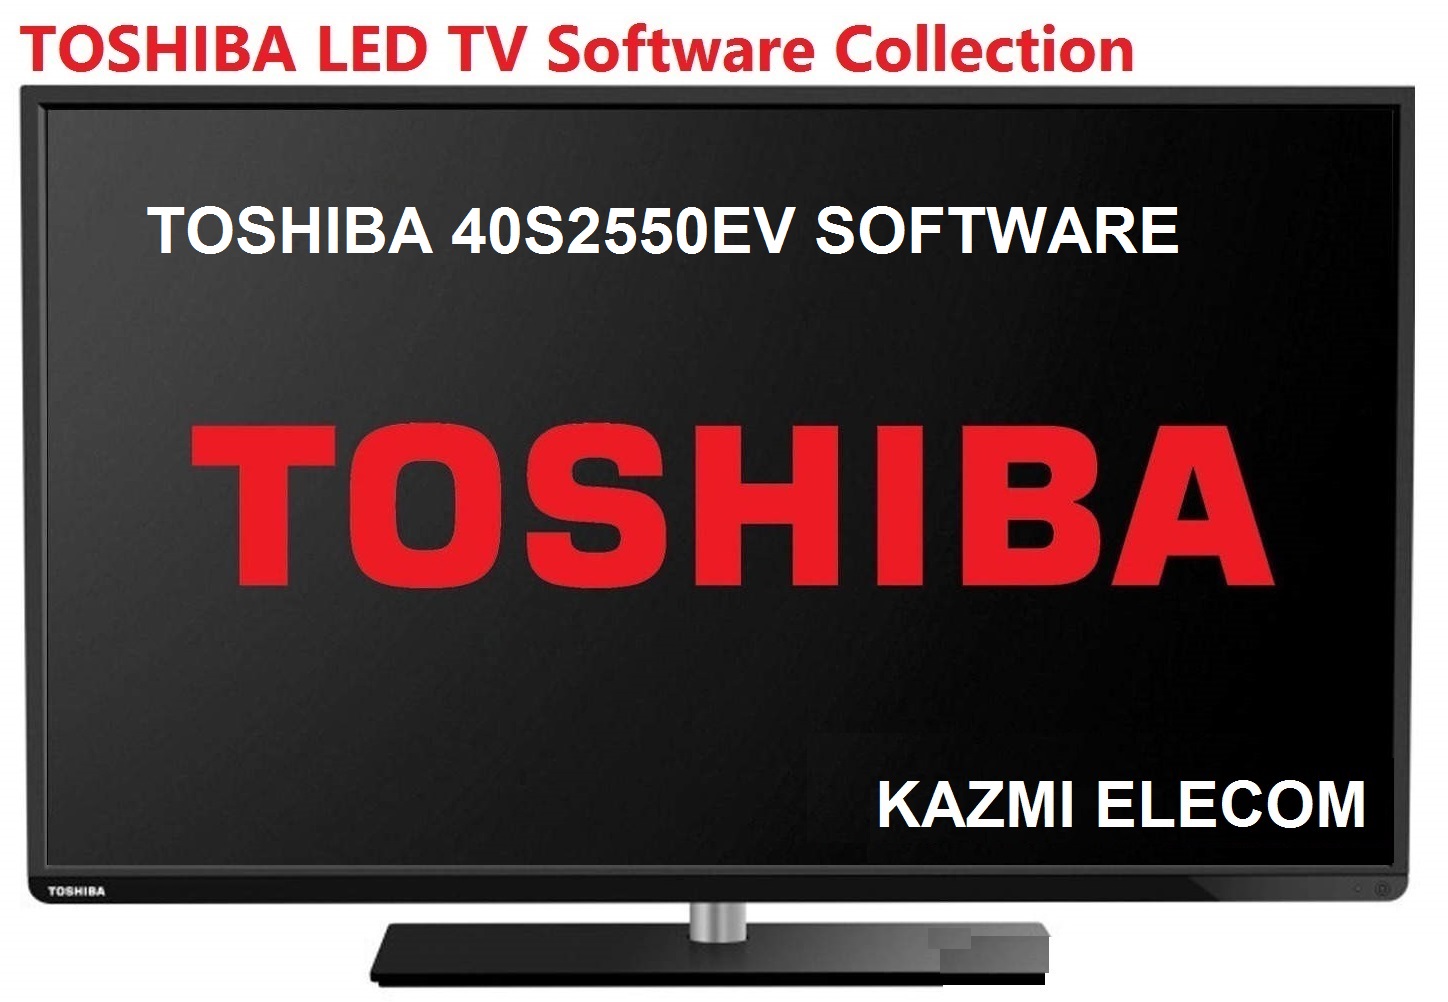 Toshiba 40S2550Ev